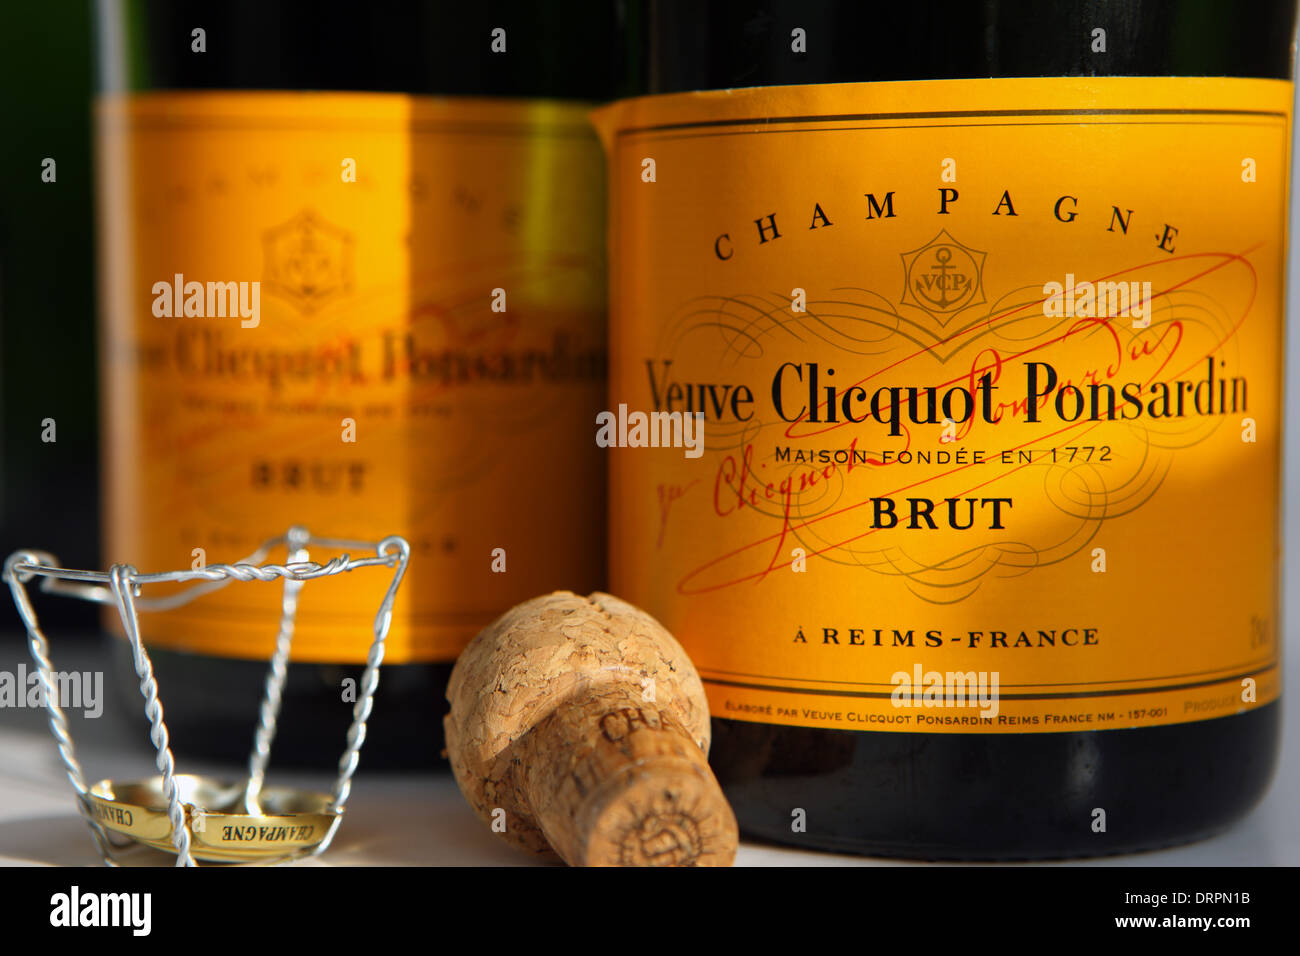 CUSTOM ORANGE Champagne Label Digital Download Veuve Cliquot 